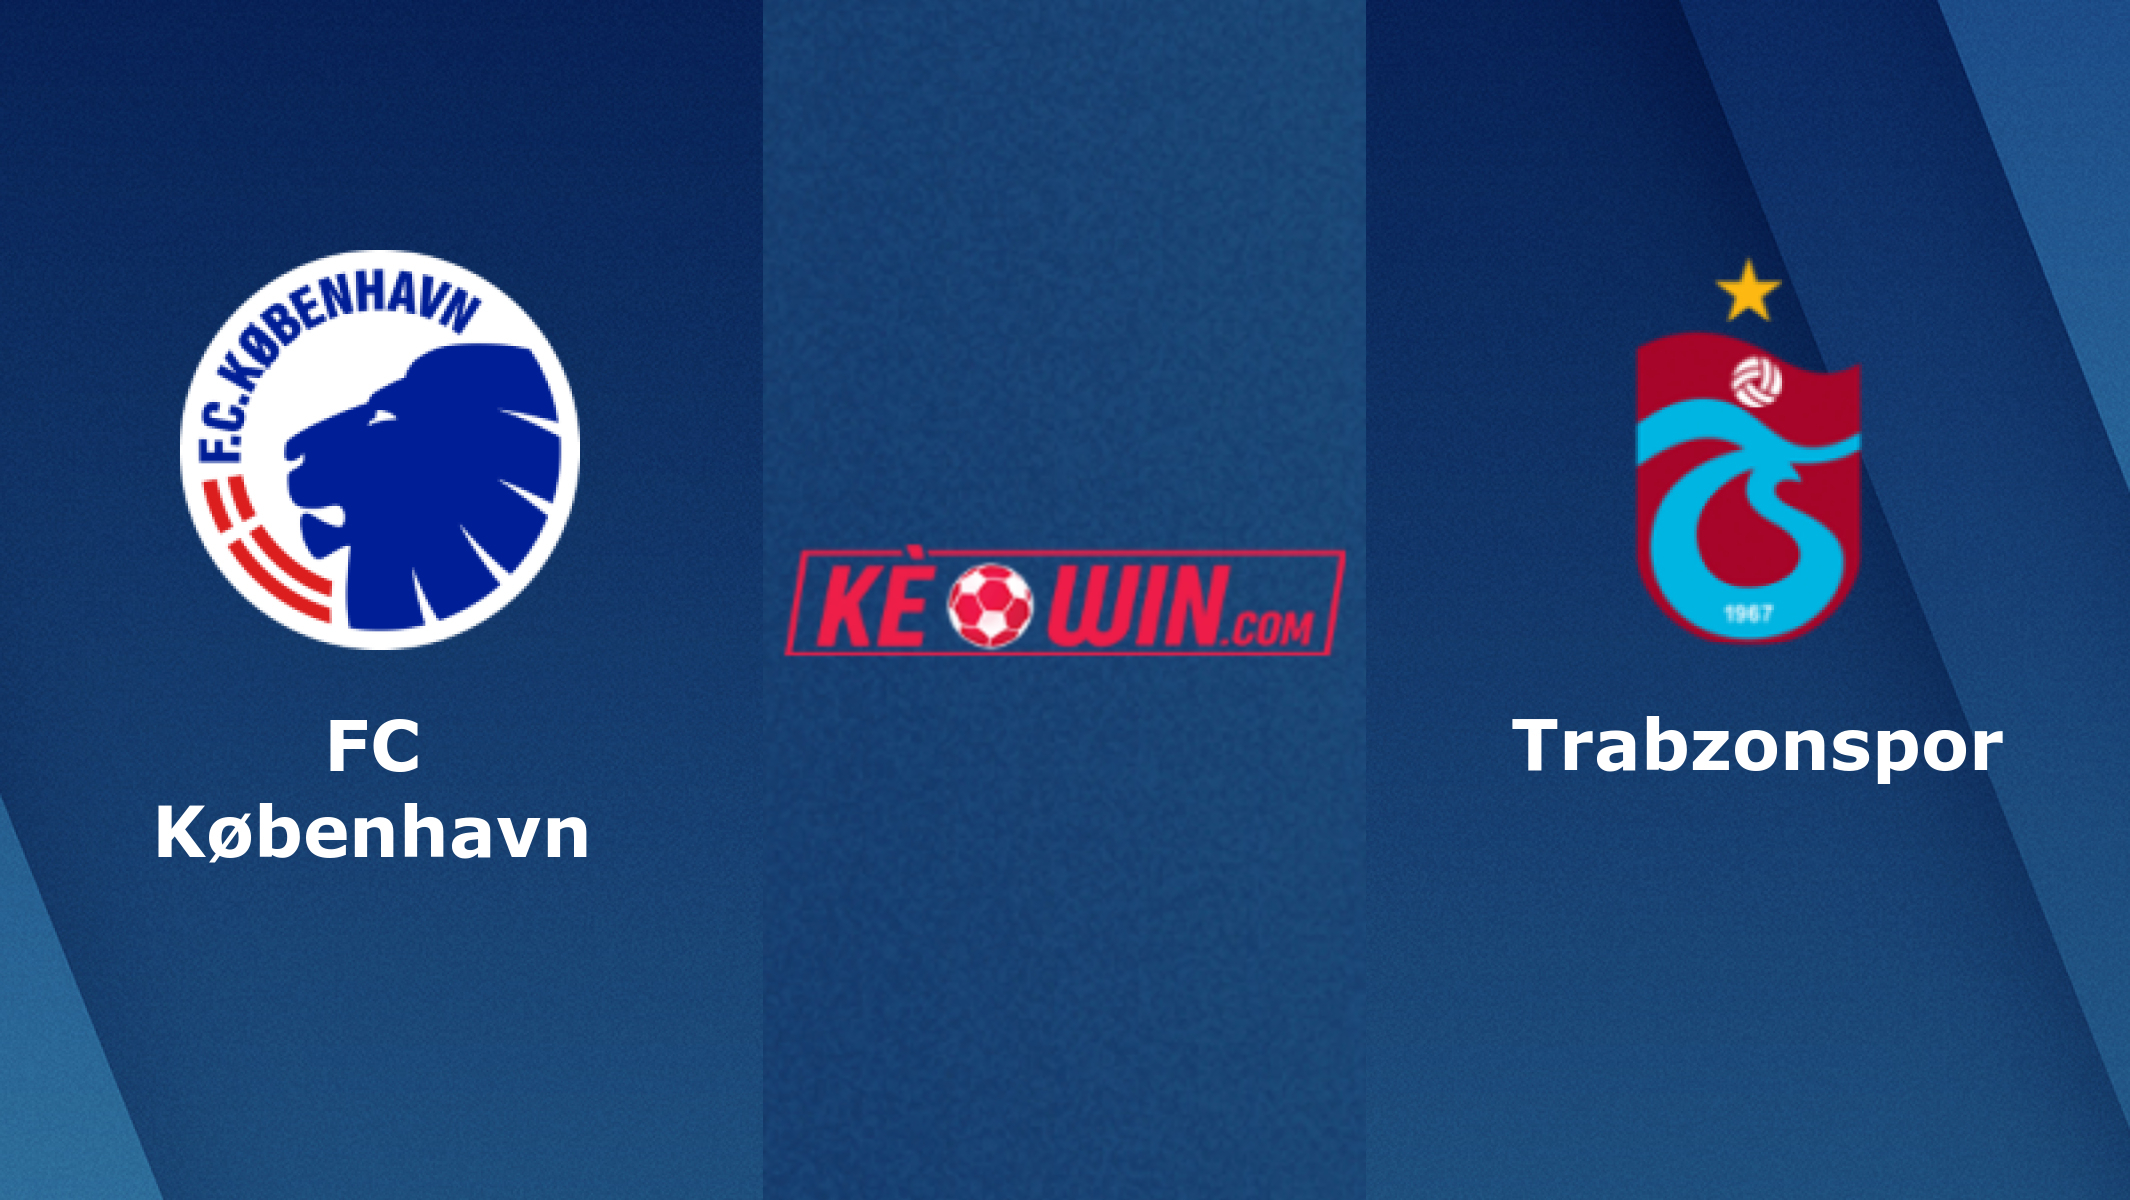 FC København vs Trabzonspor – Soi kèo bóng 02h00 17/08/2022 – UEFA Champions League